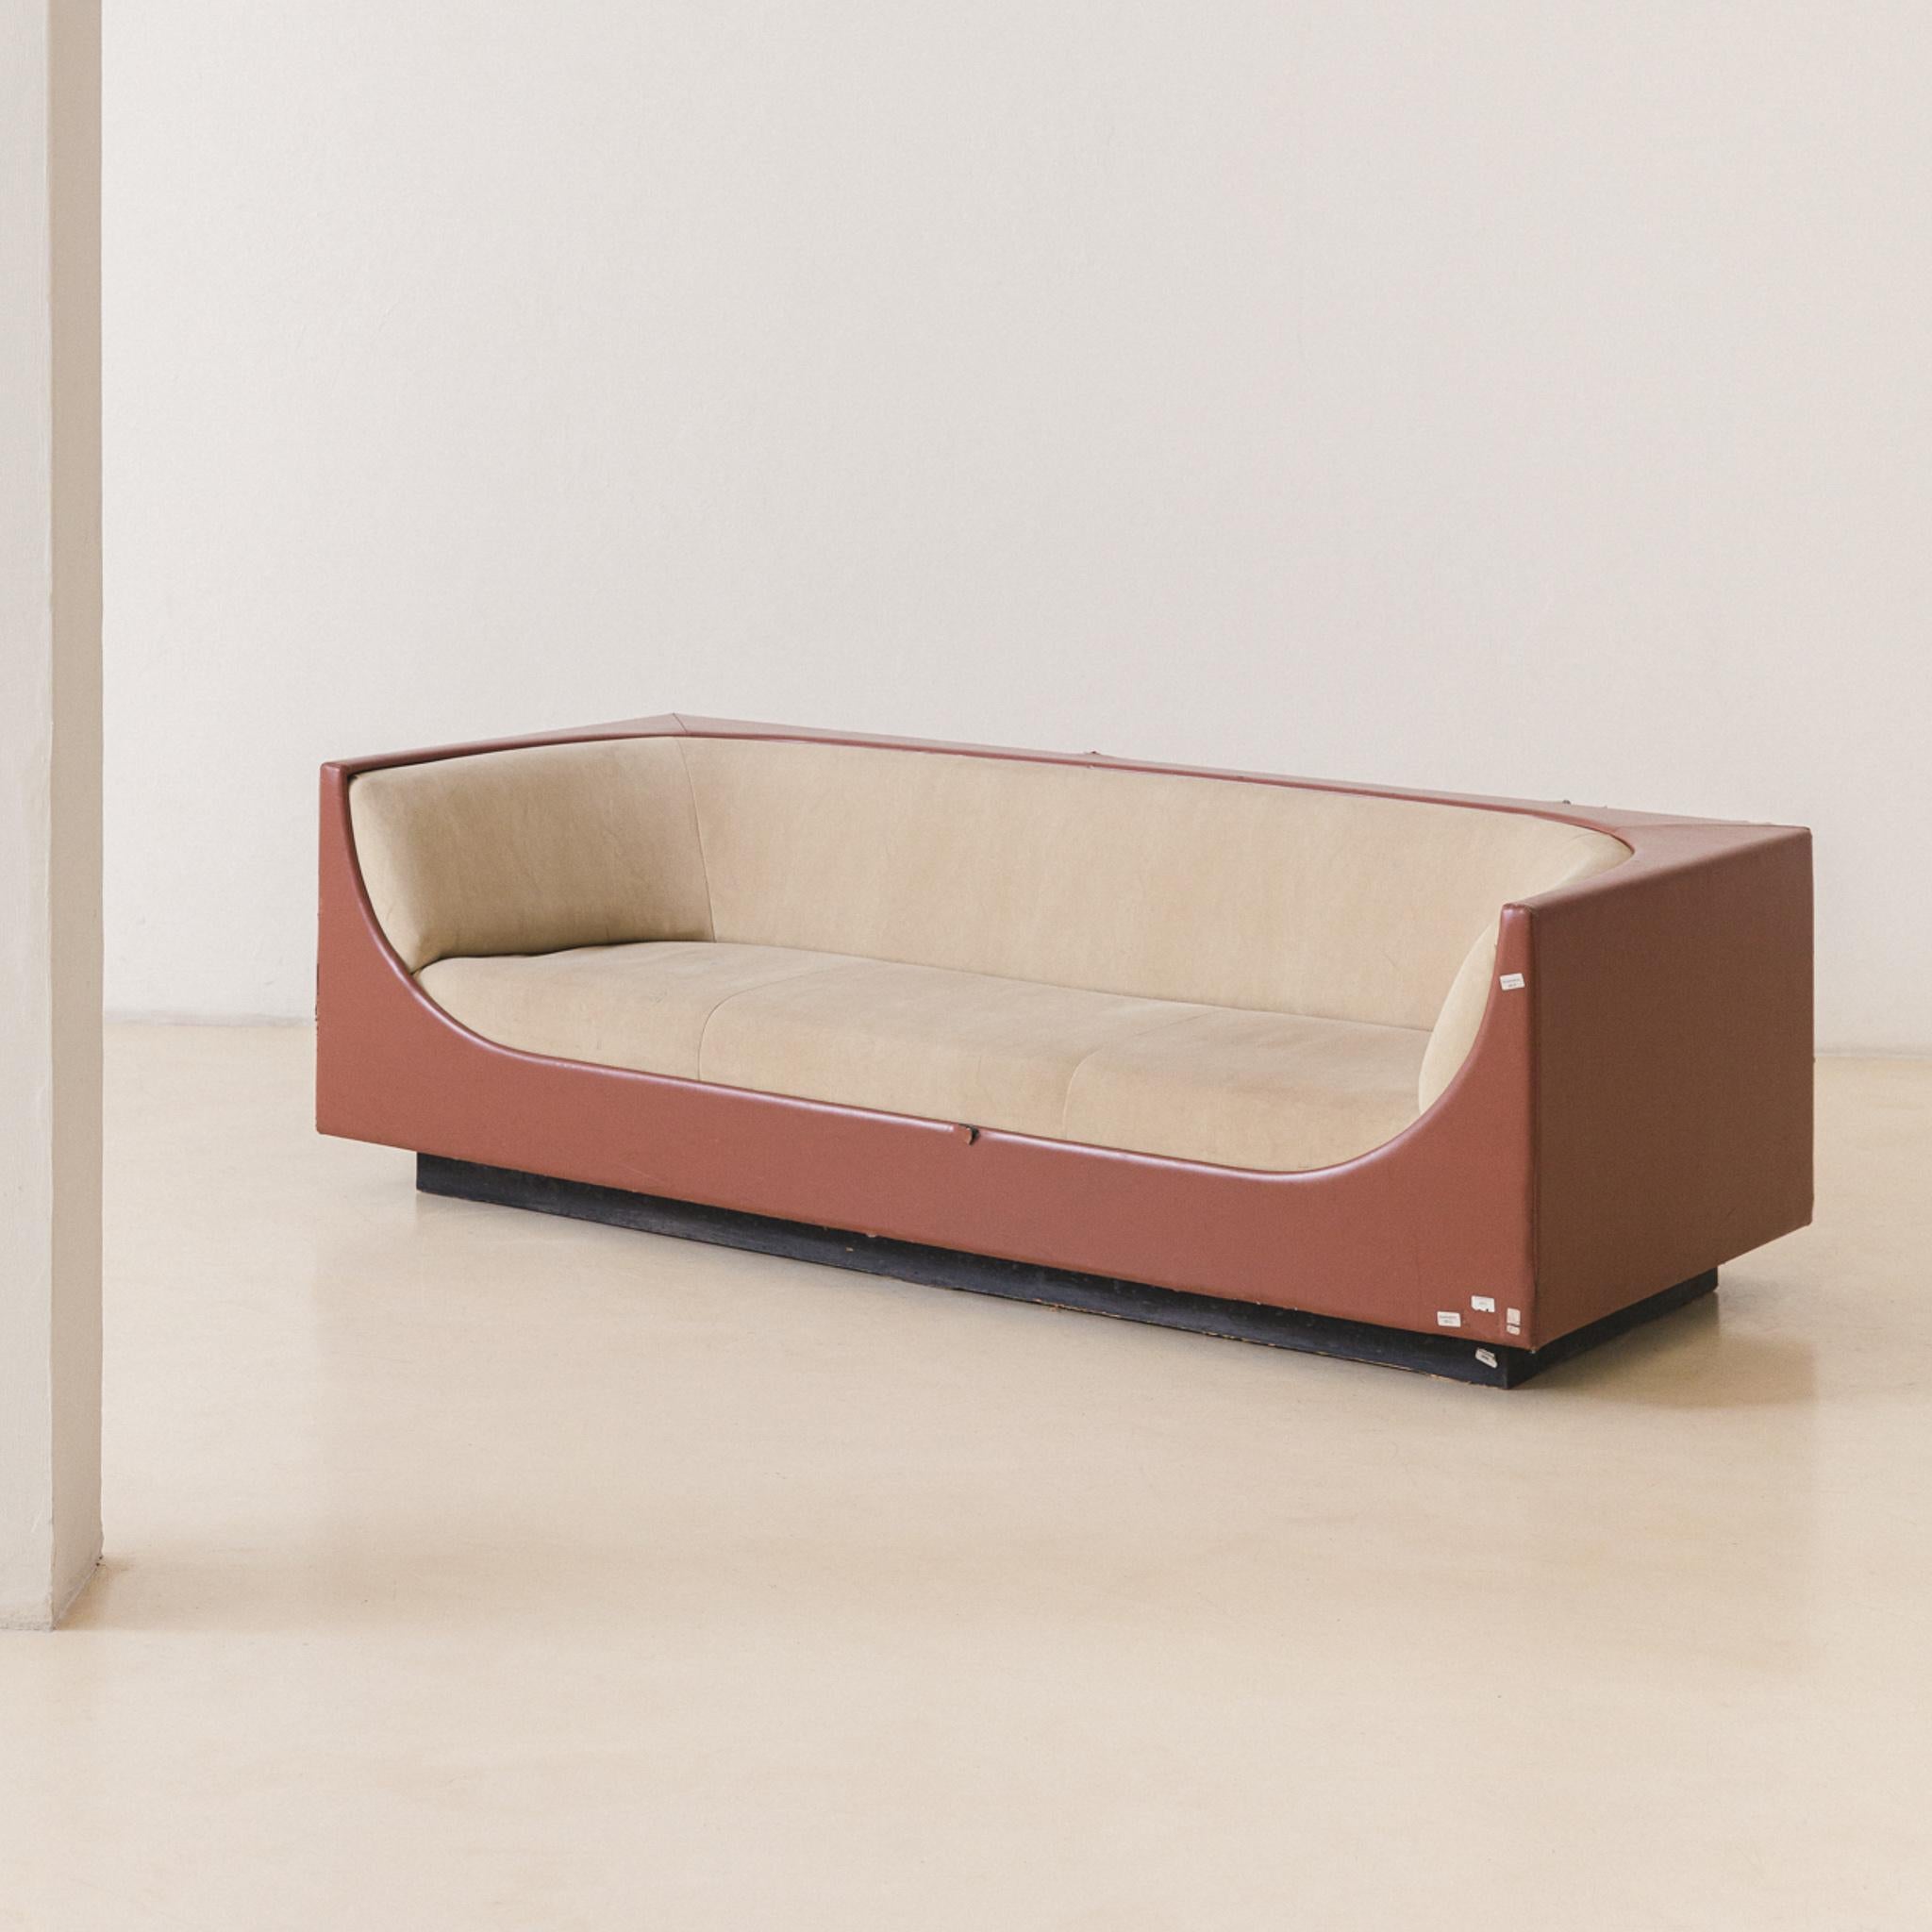 Late 20th Century Mid-Century Modern Cube Sofa by Brazilian Designer Jorge Zalszupin, 1970s For Sale